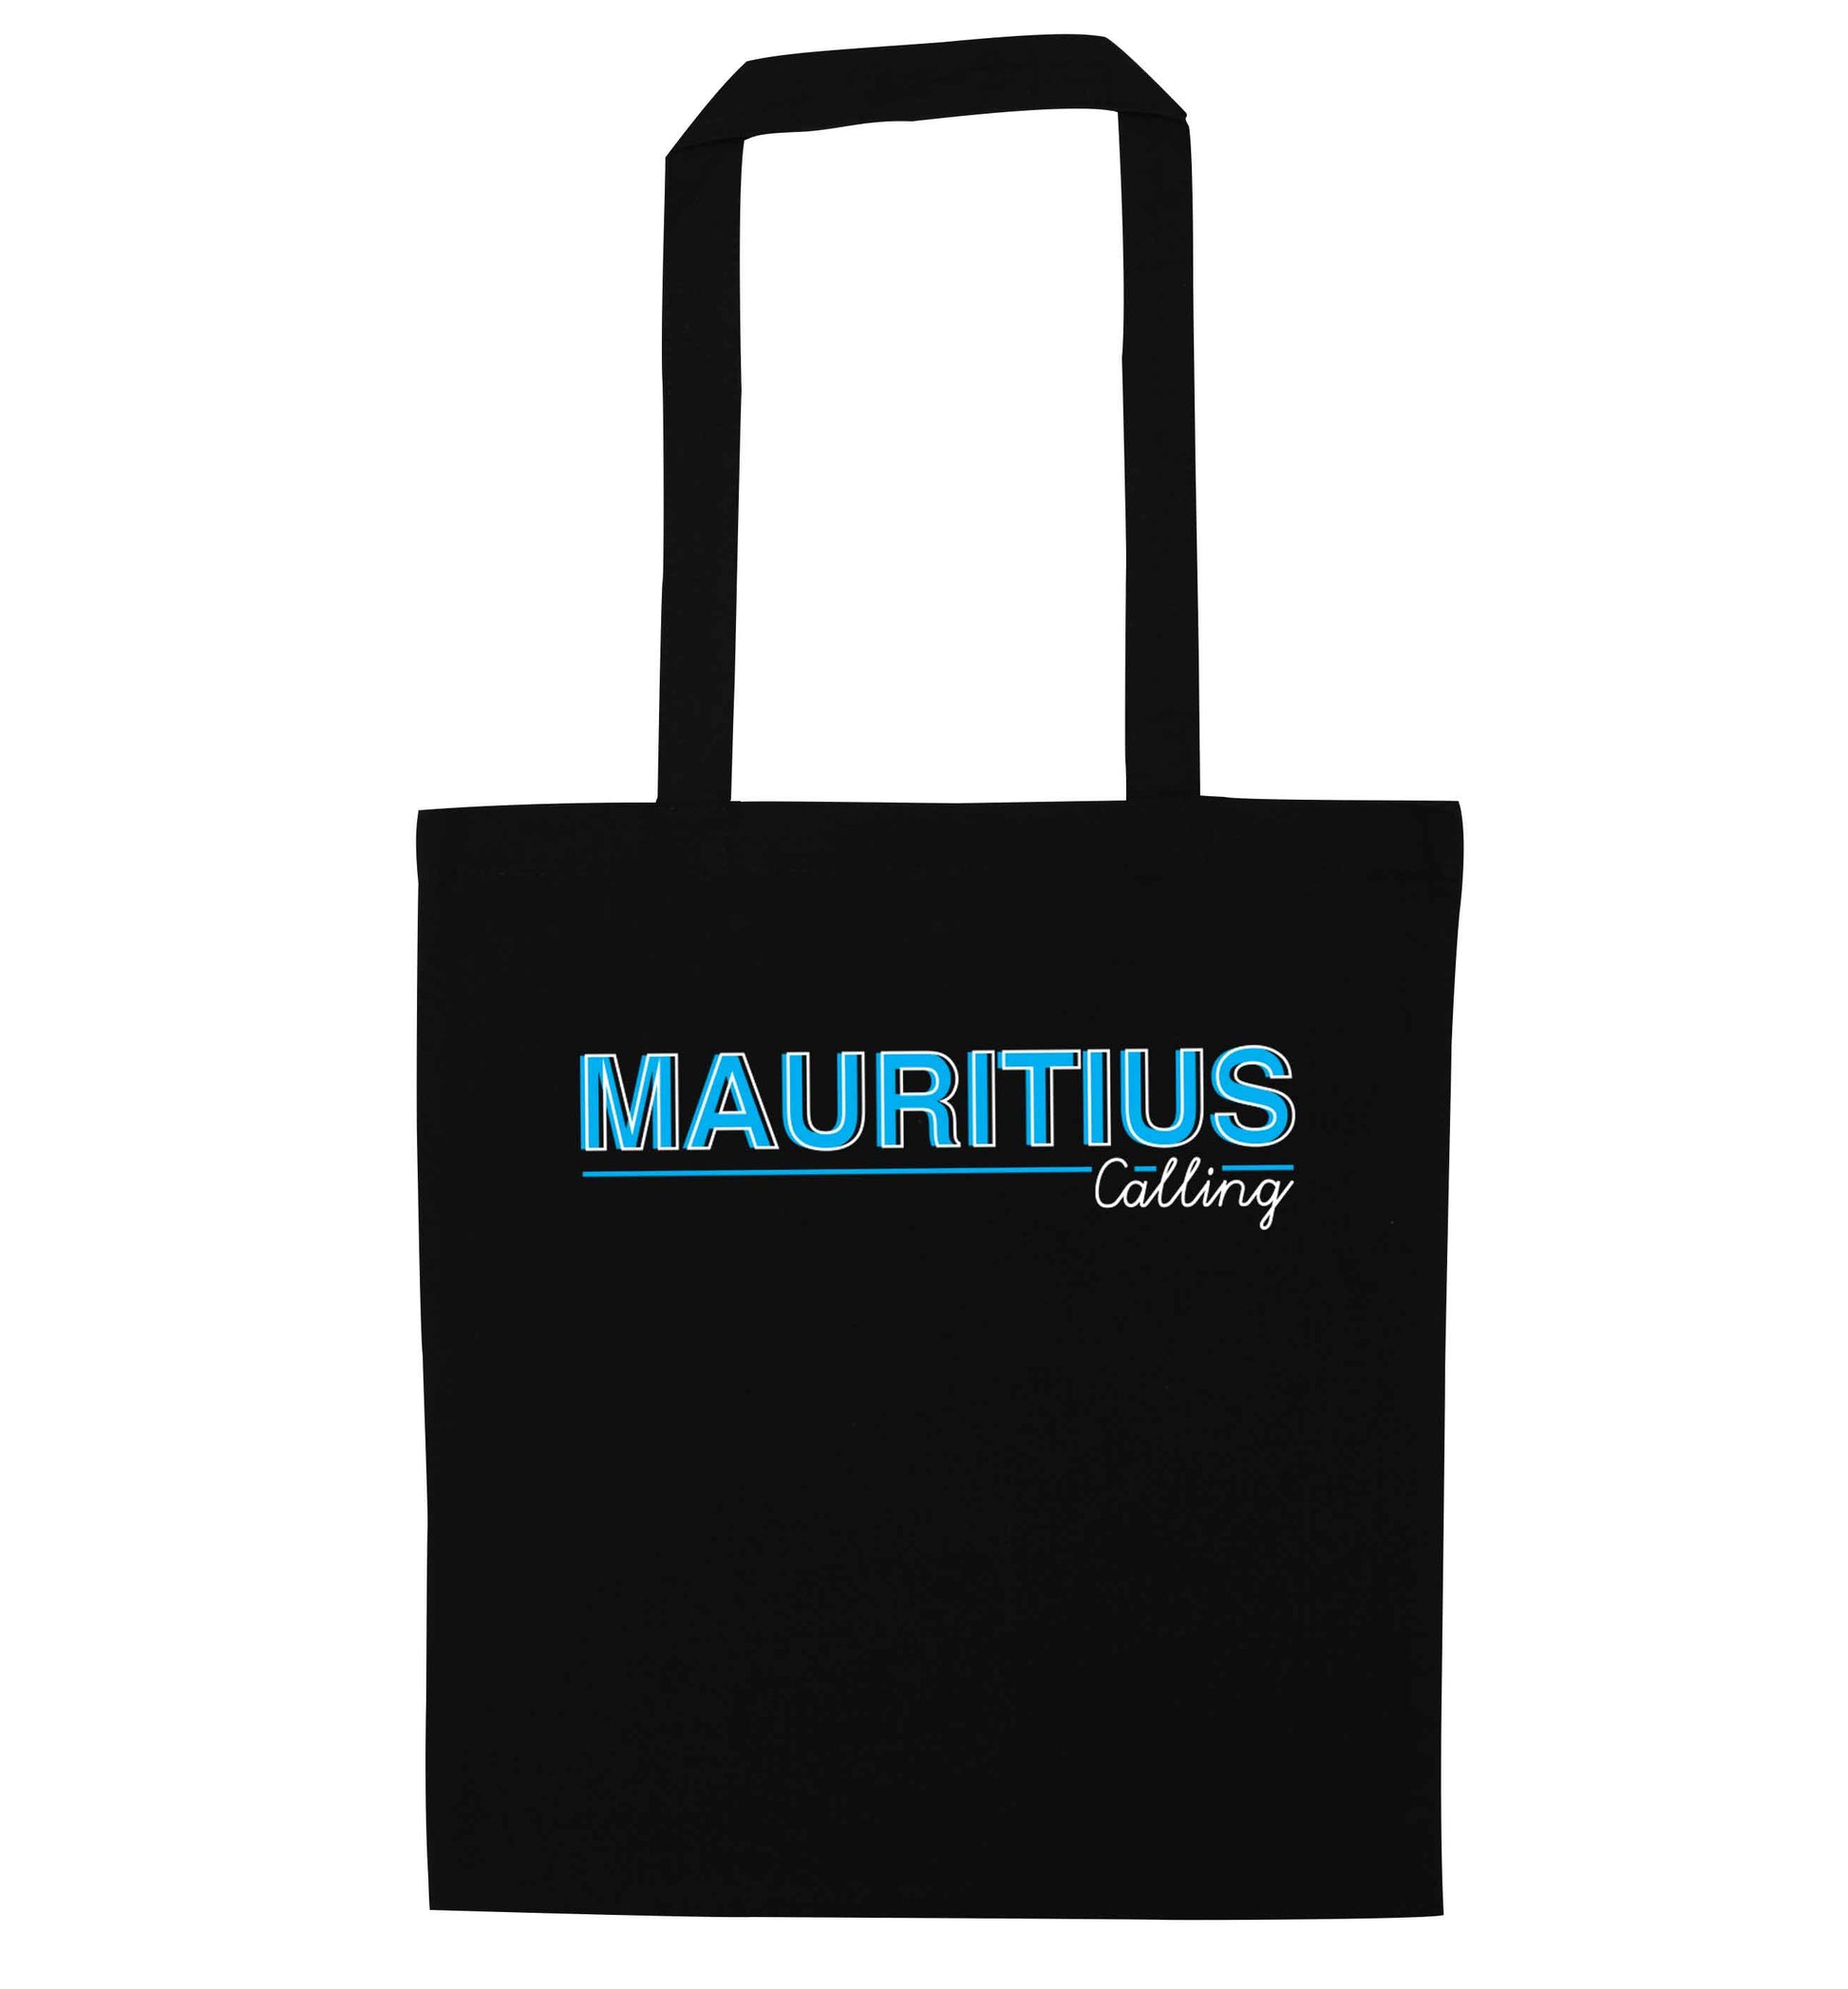 Mauritius calling black tote bag